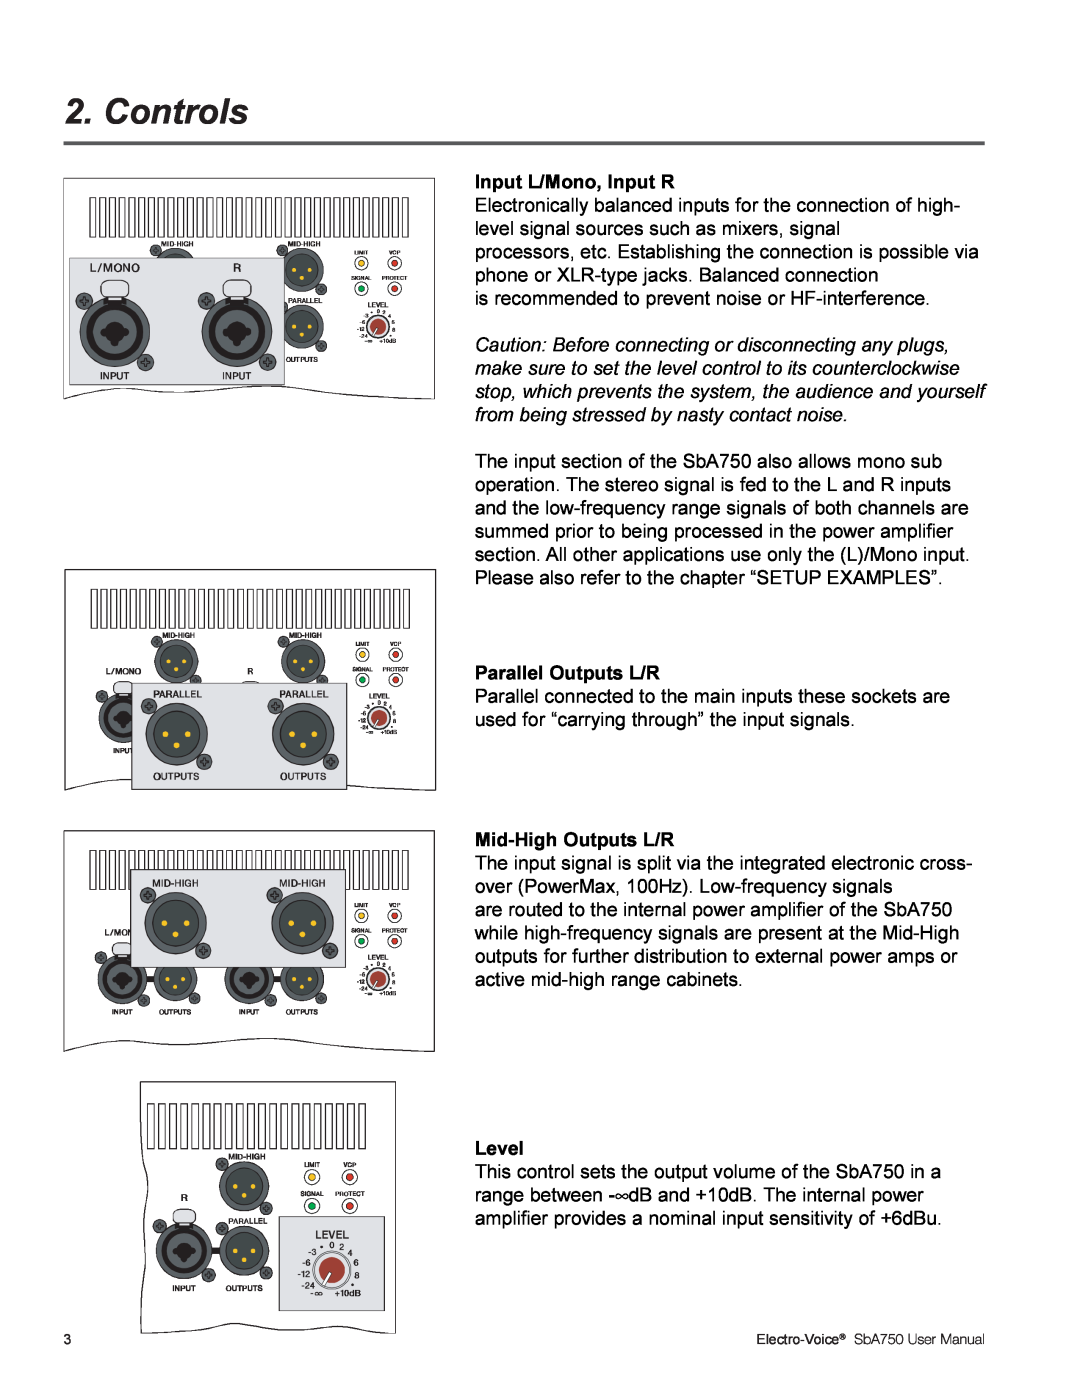 Electro-Voice SBA750 Controls, Input L/Mono, Input R, Parallel Outputs L/R, Mid-HighOutputs L/R, Level, Electro-Voice 